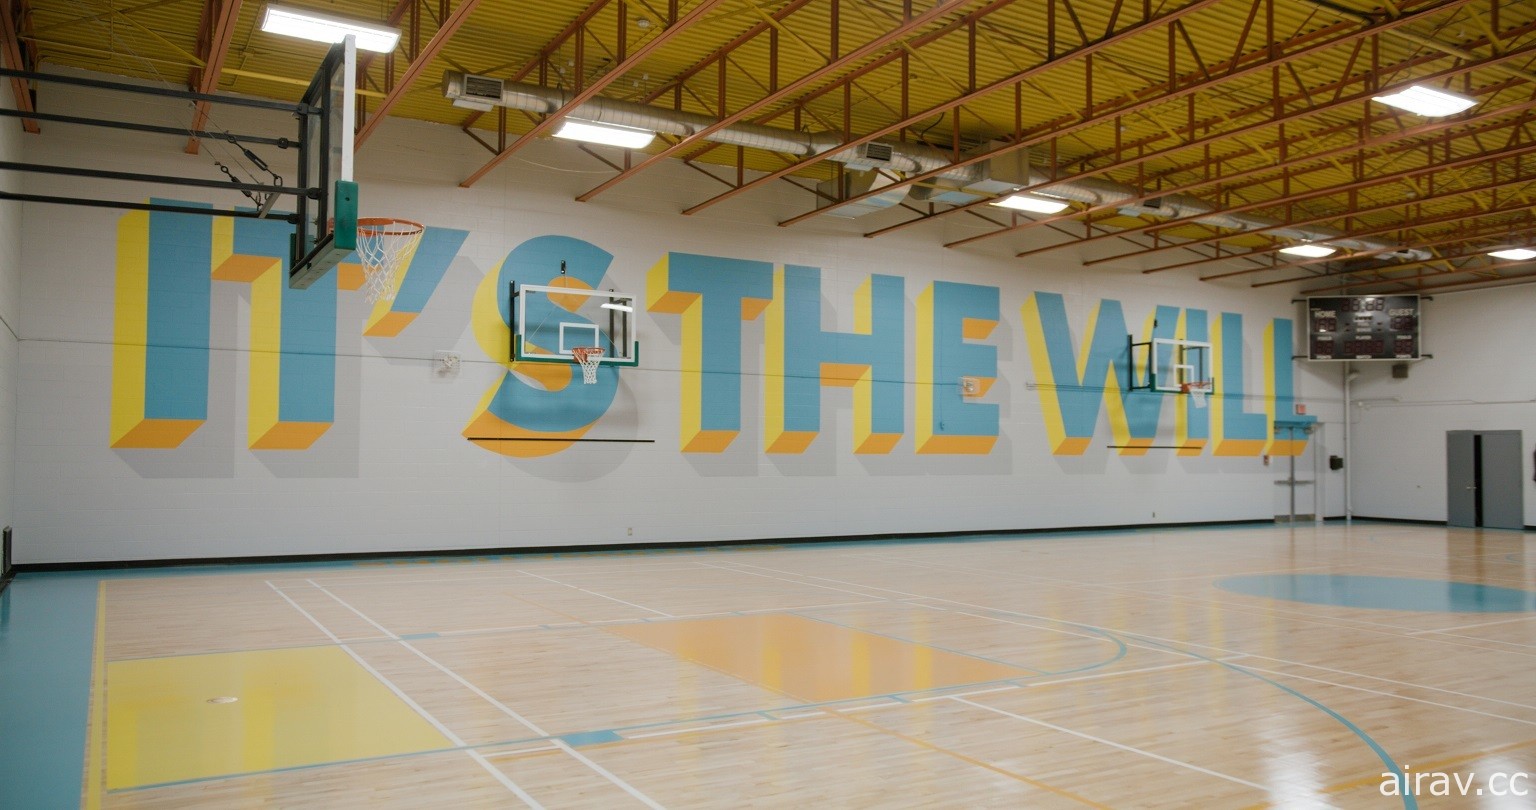 2K 基金會與藝術家 The Weeknd 和 NAV 共同翻新整修多倫多勞倫斯高地籃球場